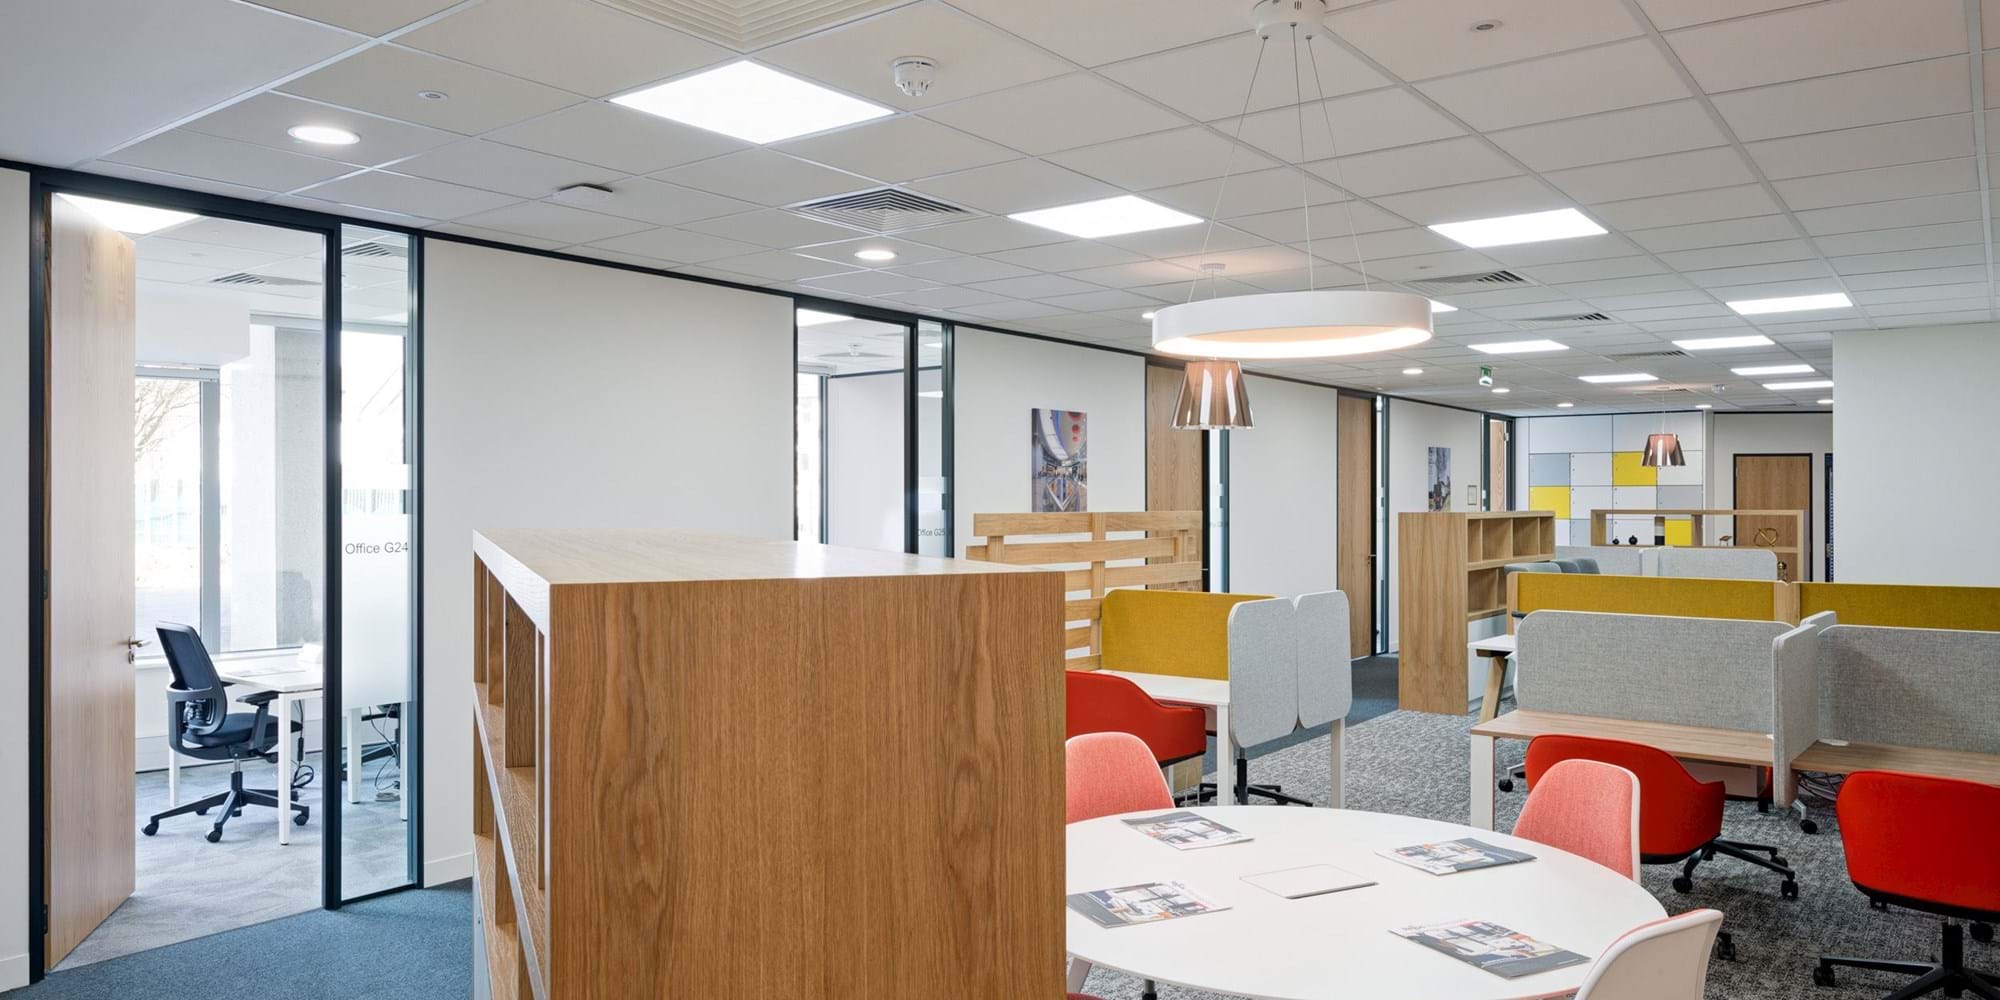 Modus Workspace office design, fit out and refurbishment - Regus Ashford - Regus Ashford 03 highres sRGB.jpg